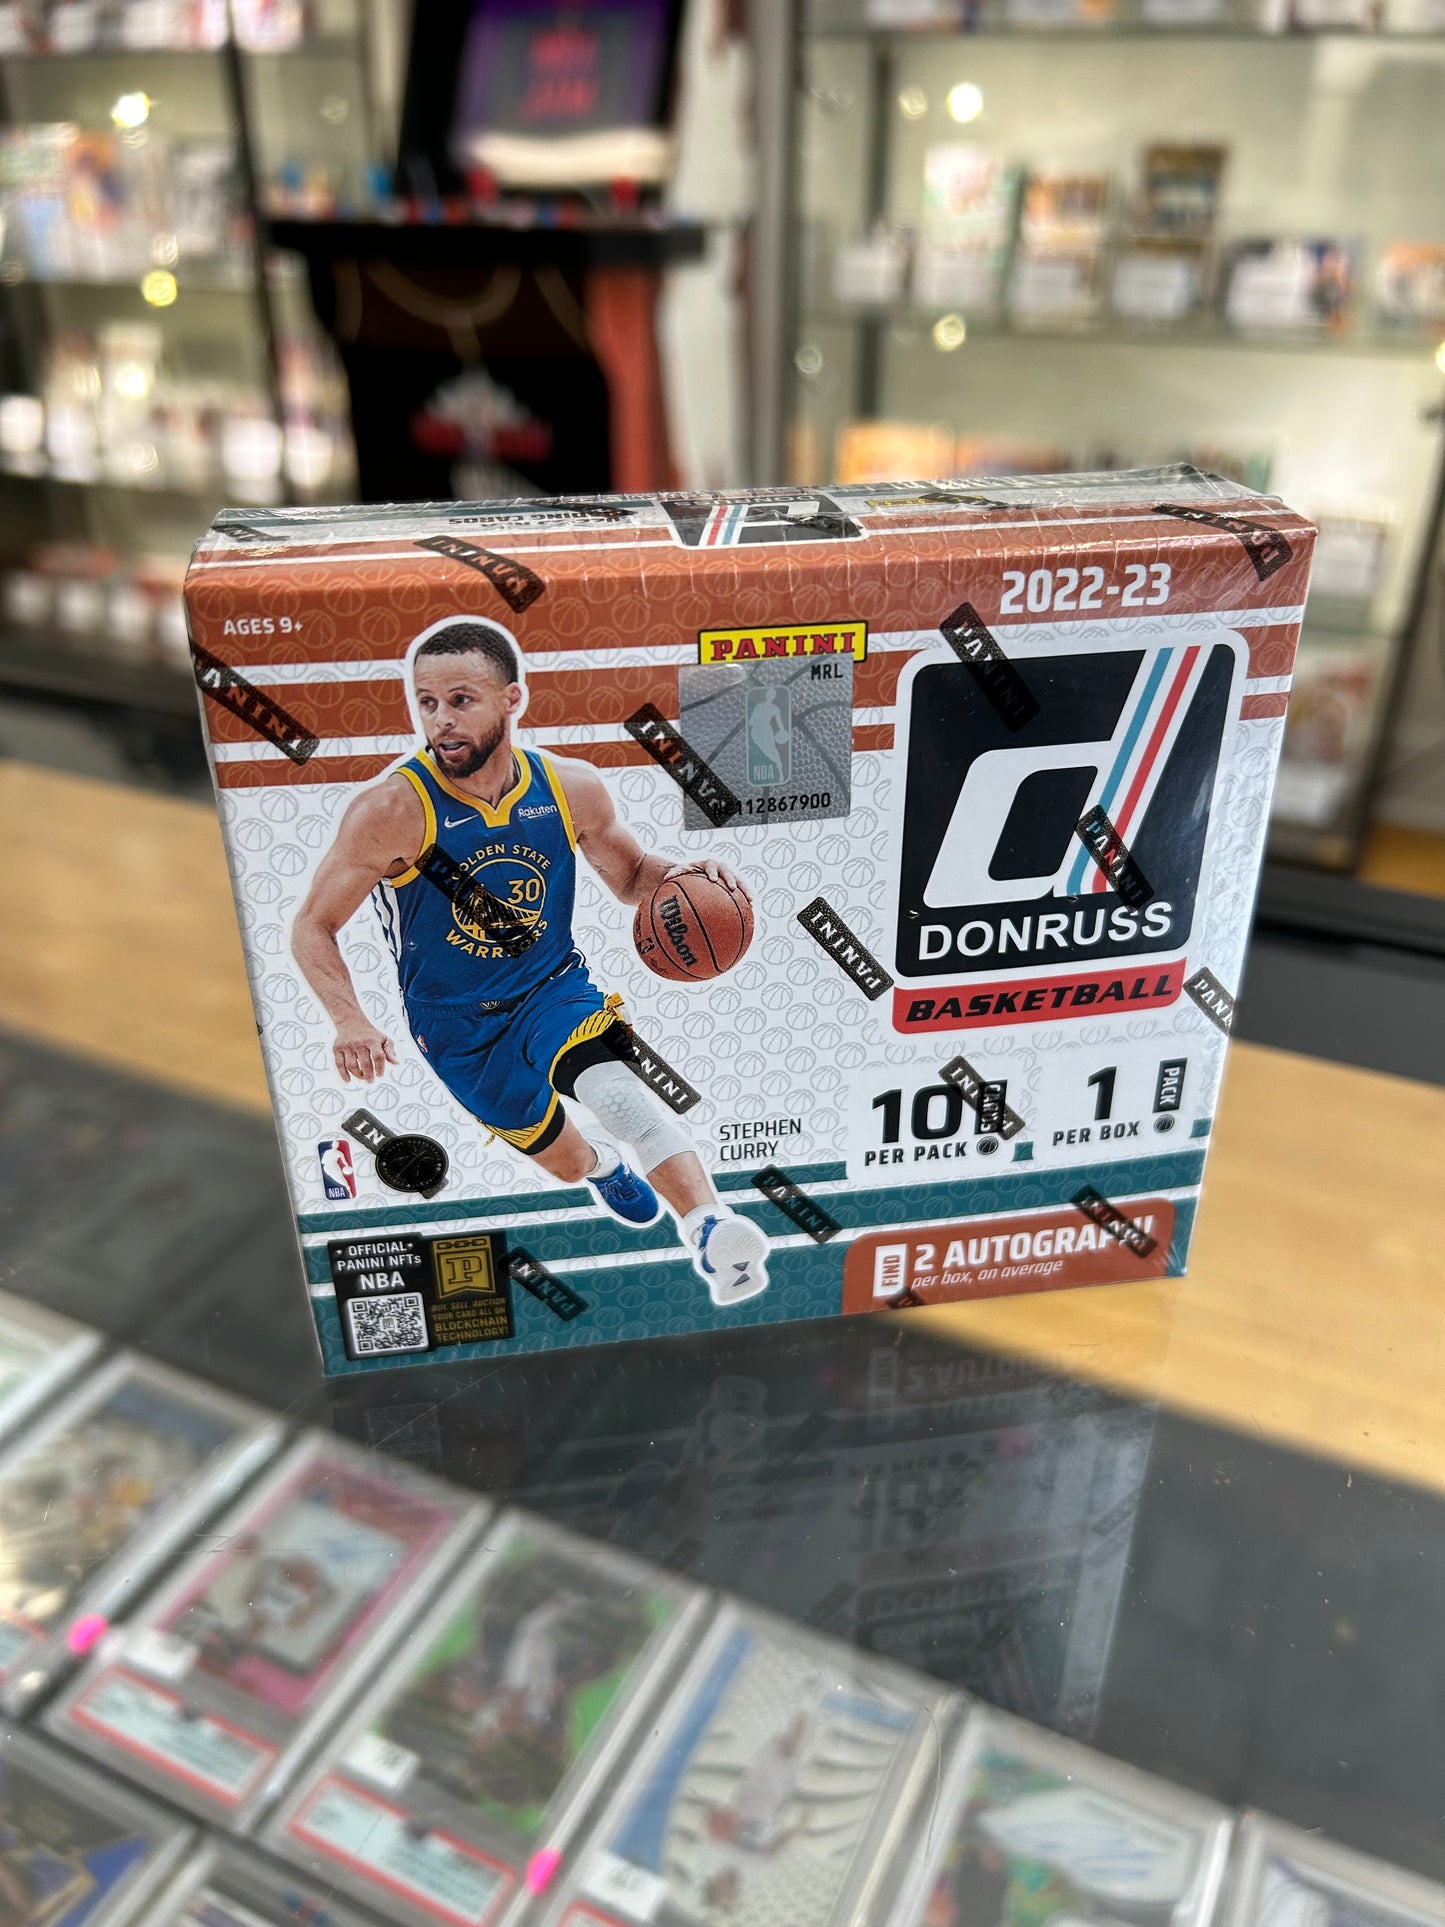 2022-23 Panini Donruss Basketball Choice Box